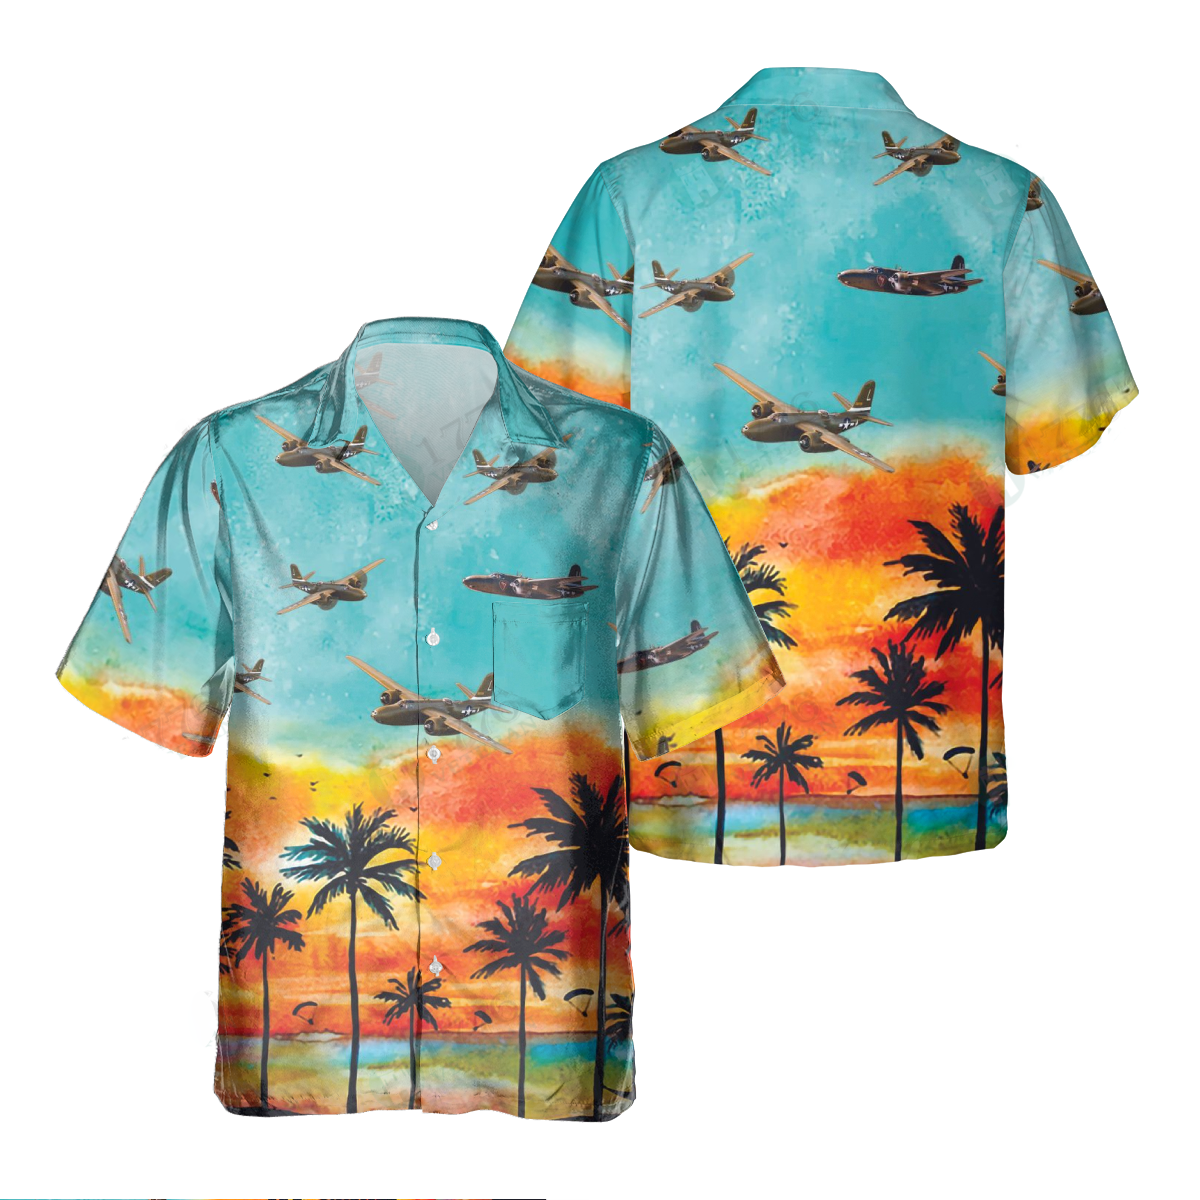 A-20 Havoc Pocket Hawaiian Shirt/ Hawaiian Shirt for Men Dad Veteran/ Patriot Day